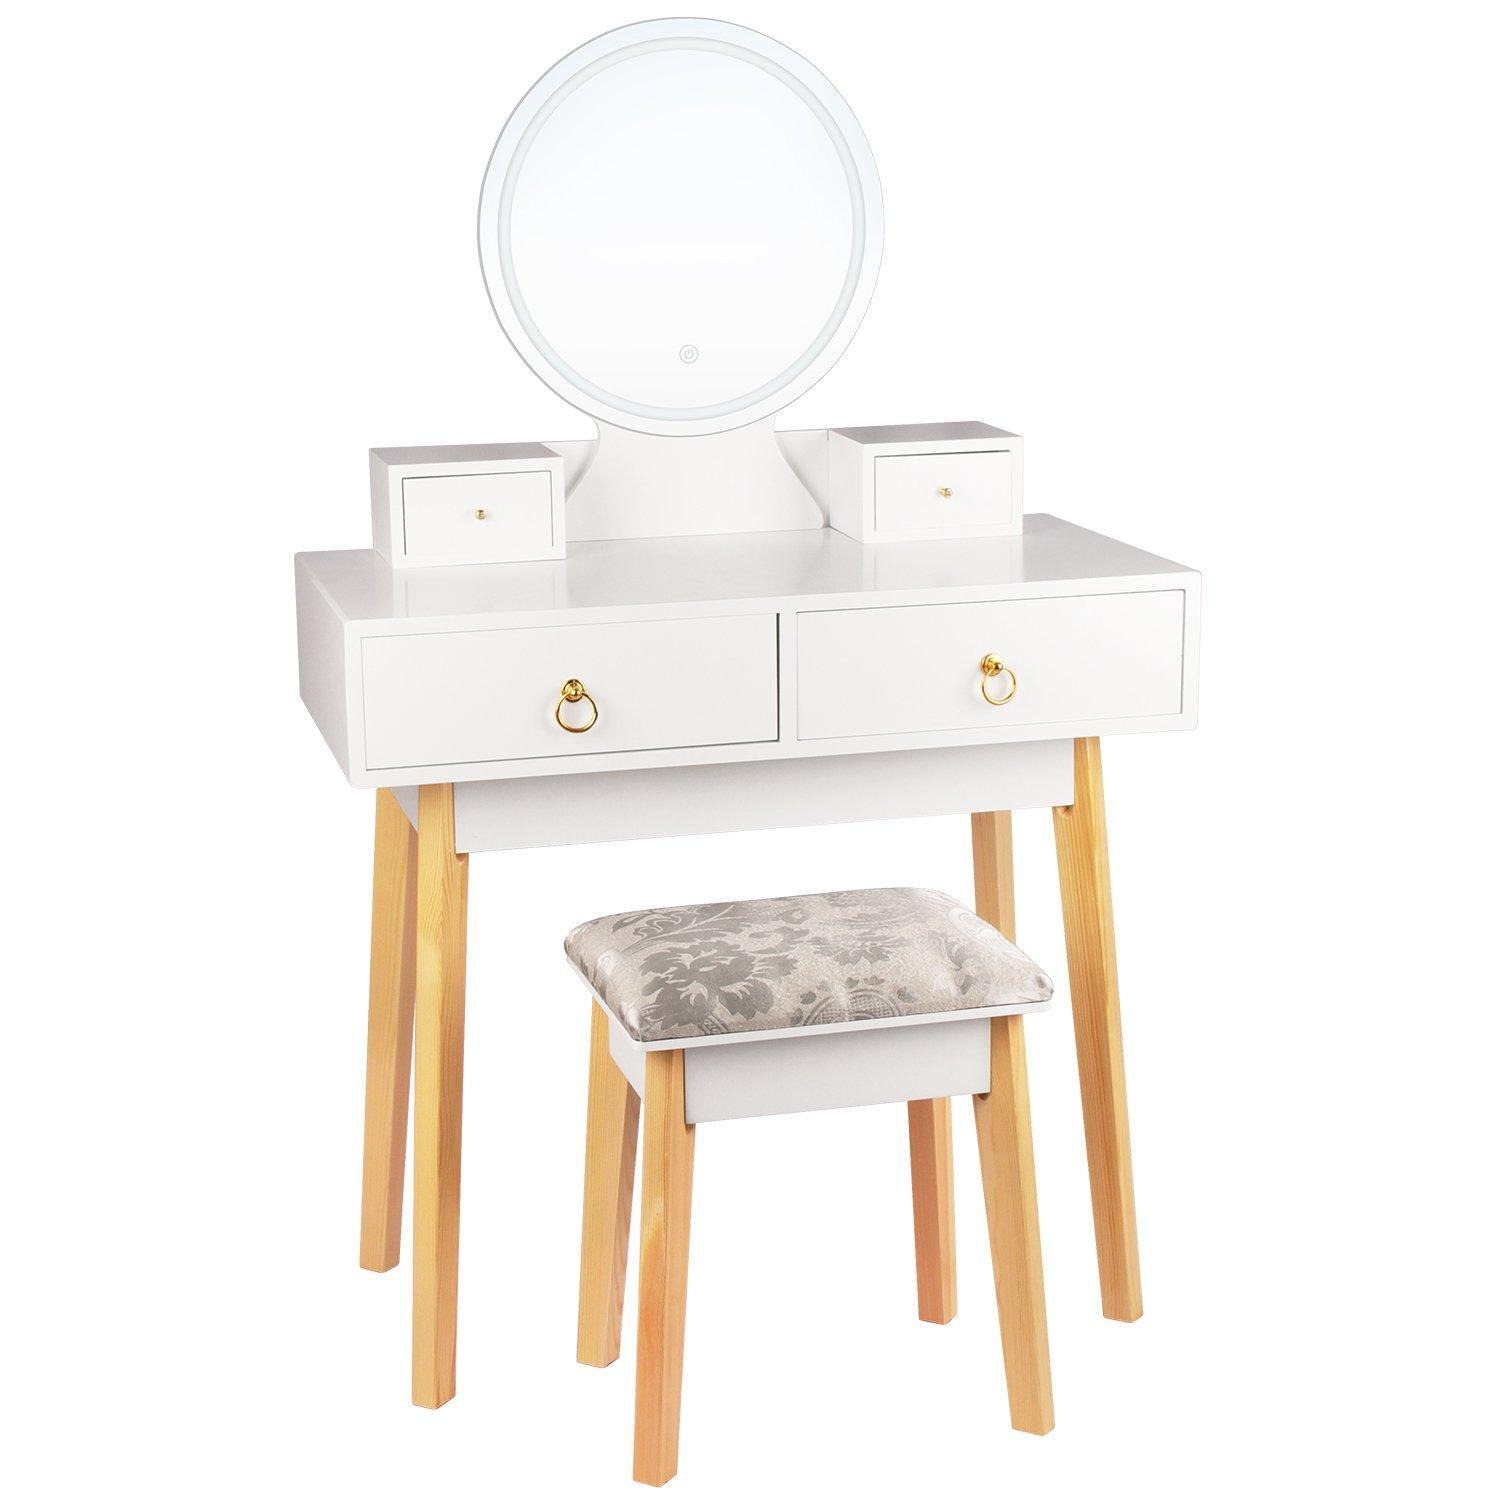 Dressing Table with Mirror LED Light Adjustanble Brightness Makeup Table Stool Set - image 1